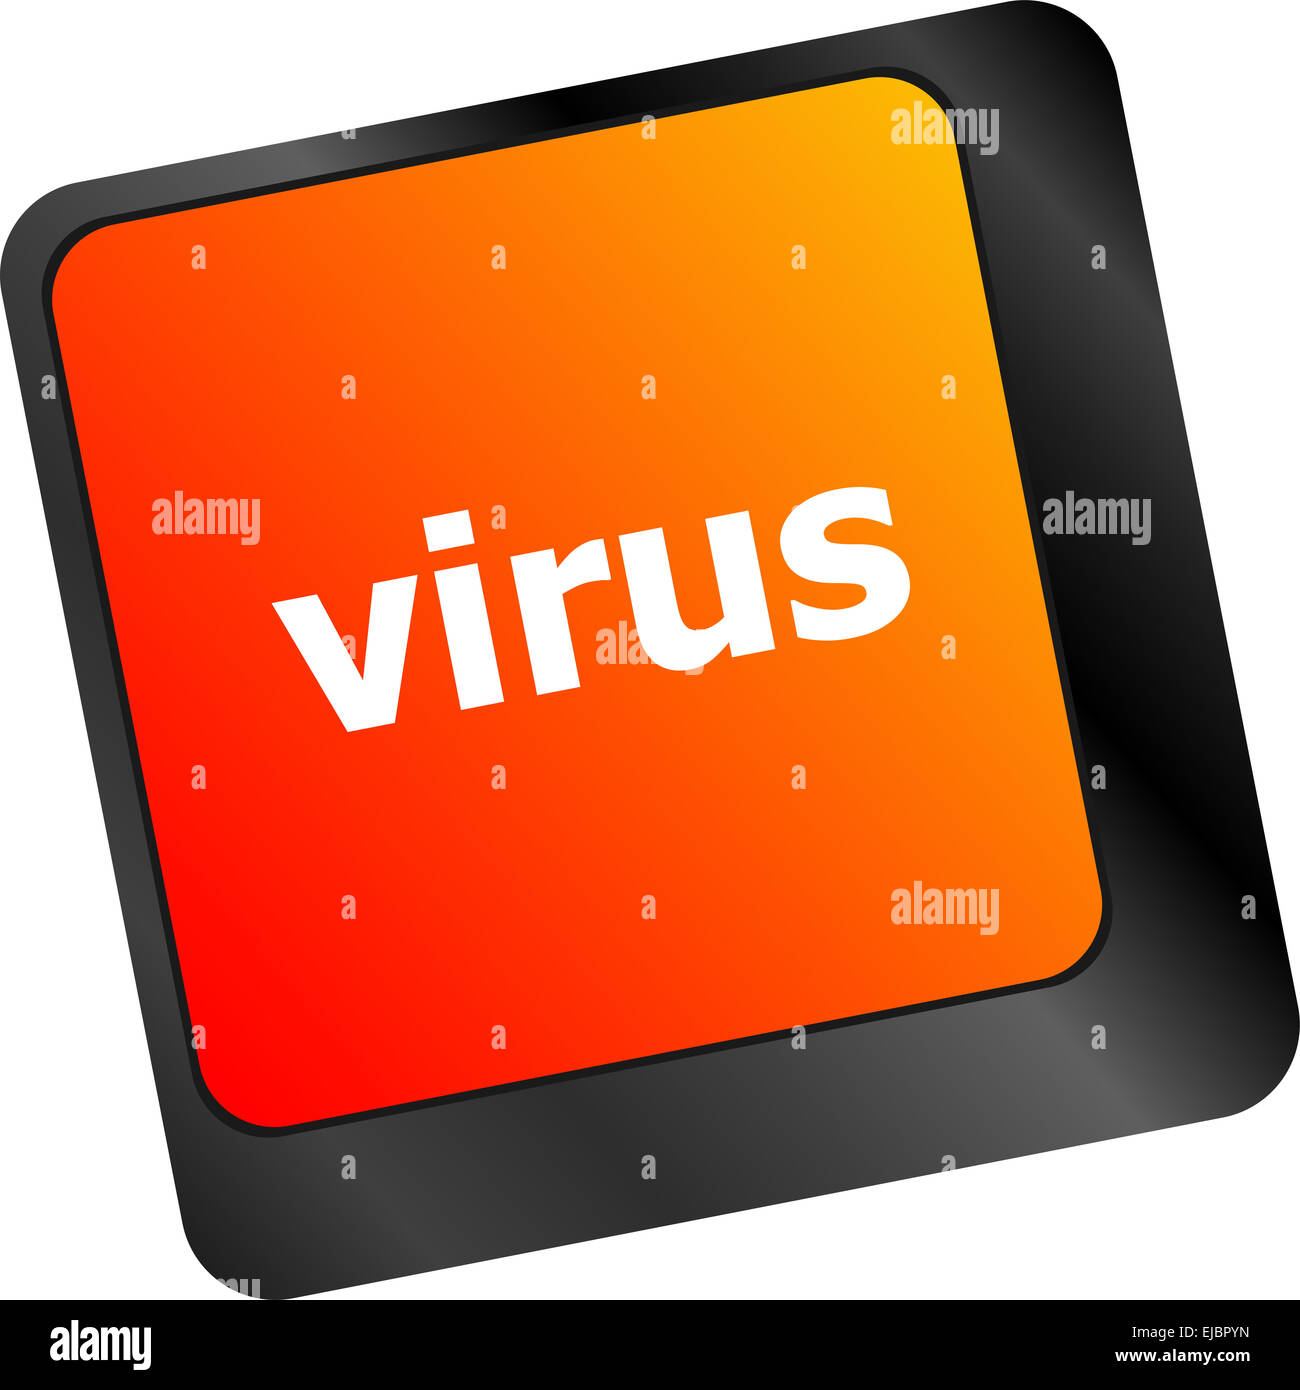 Virus button on computer keyboard - it concept Stock Photo